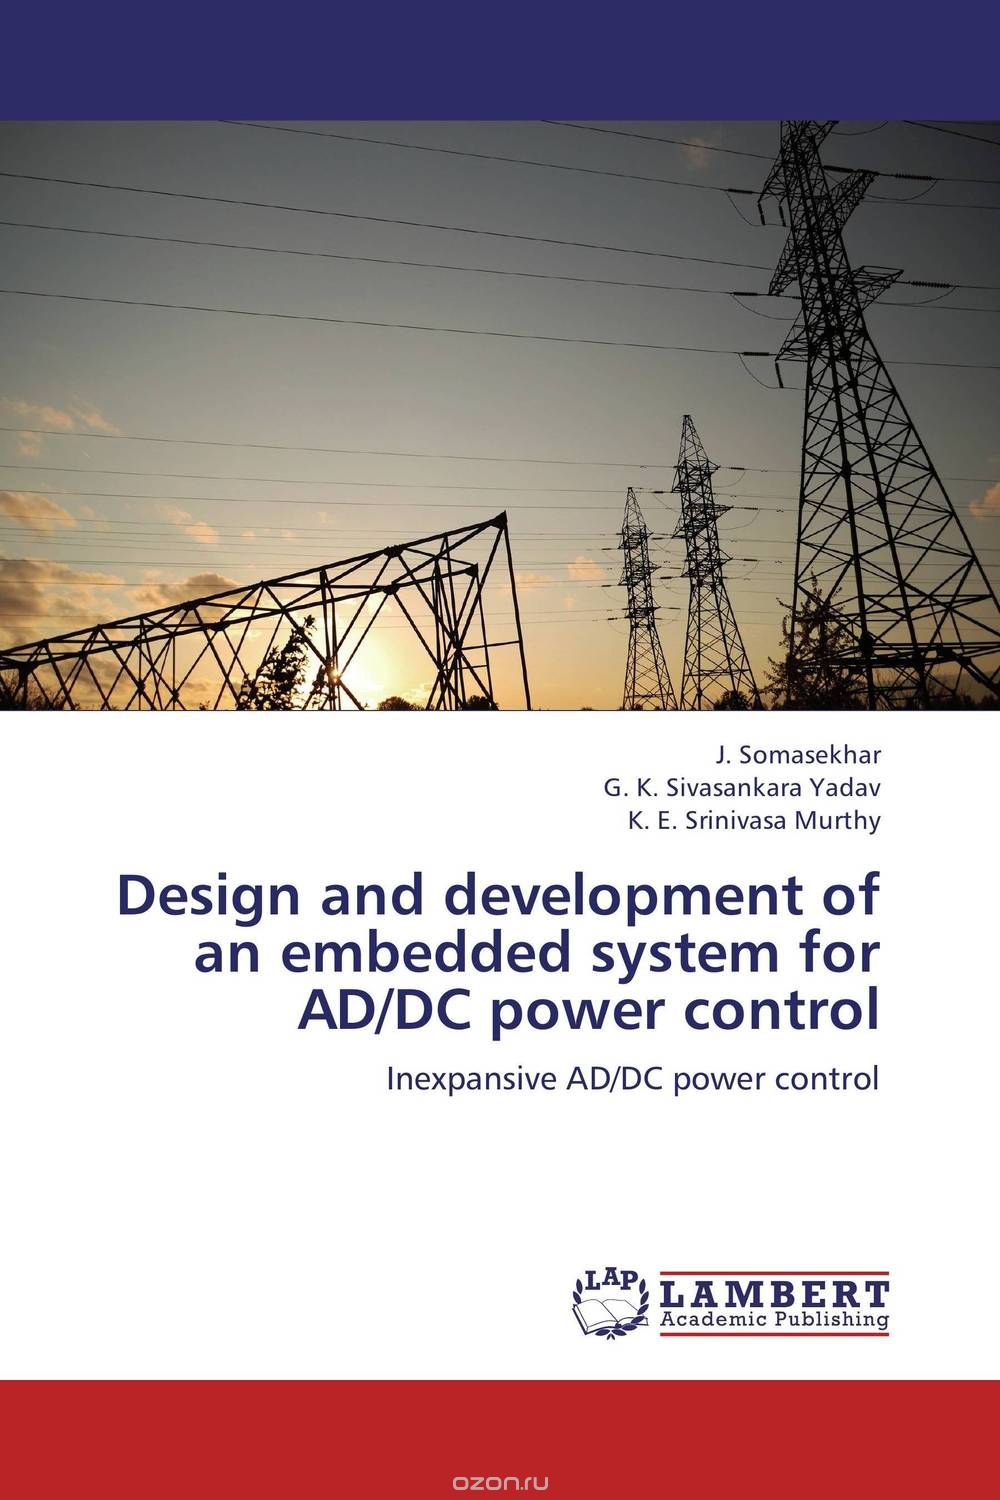 Скачать книгу "Design and development of an embedded system for AD/DC power control"